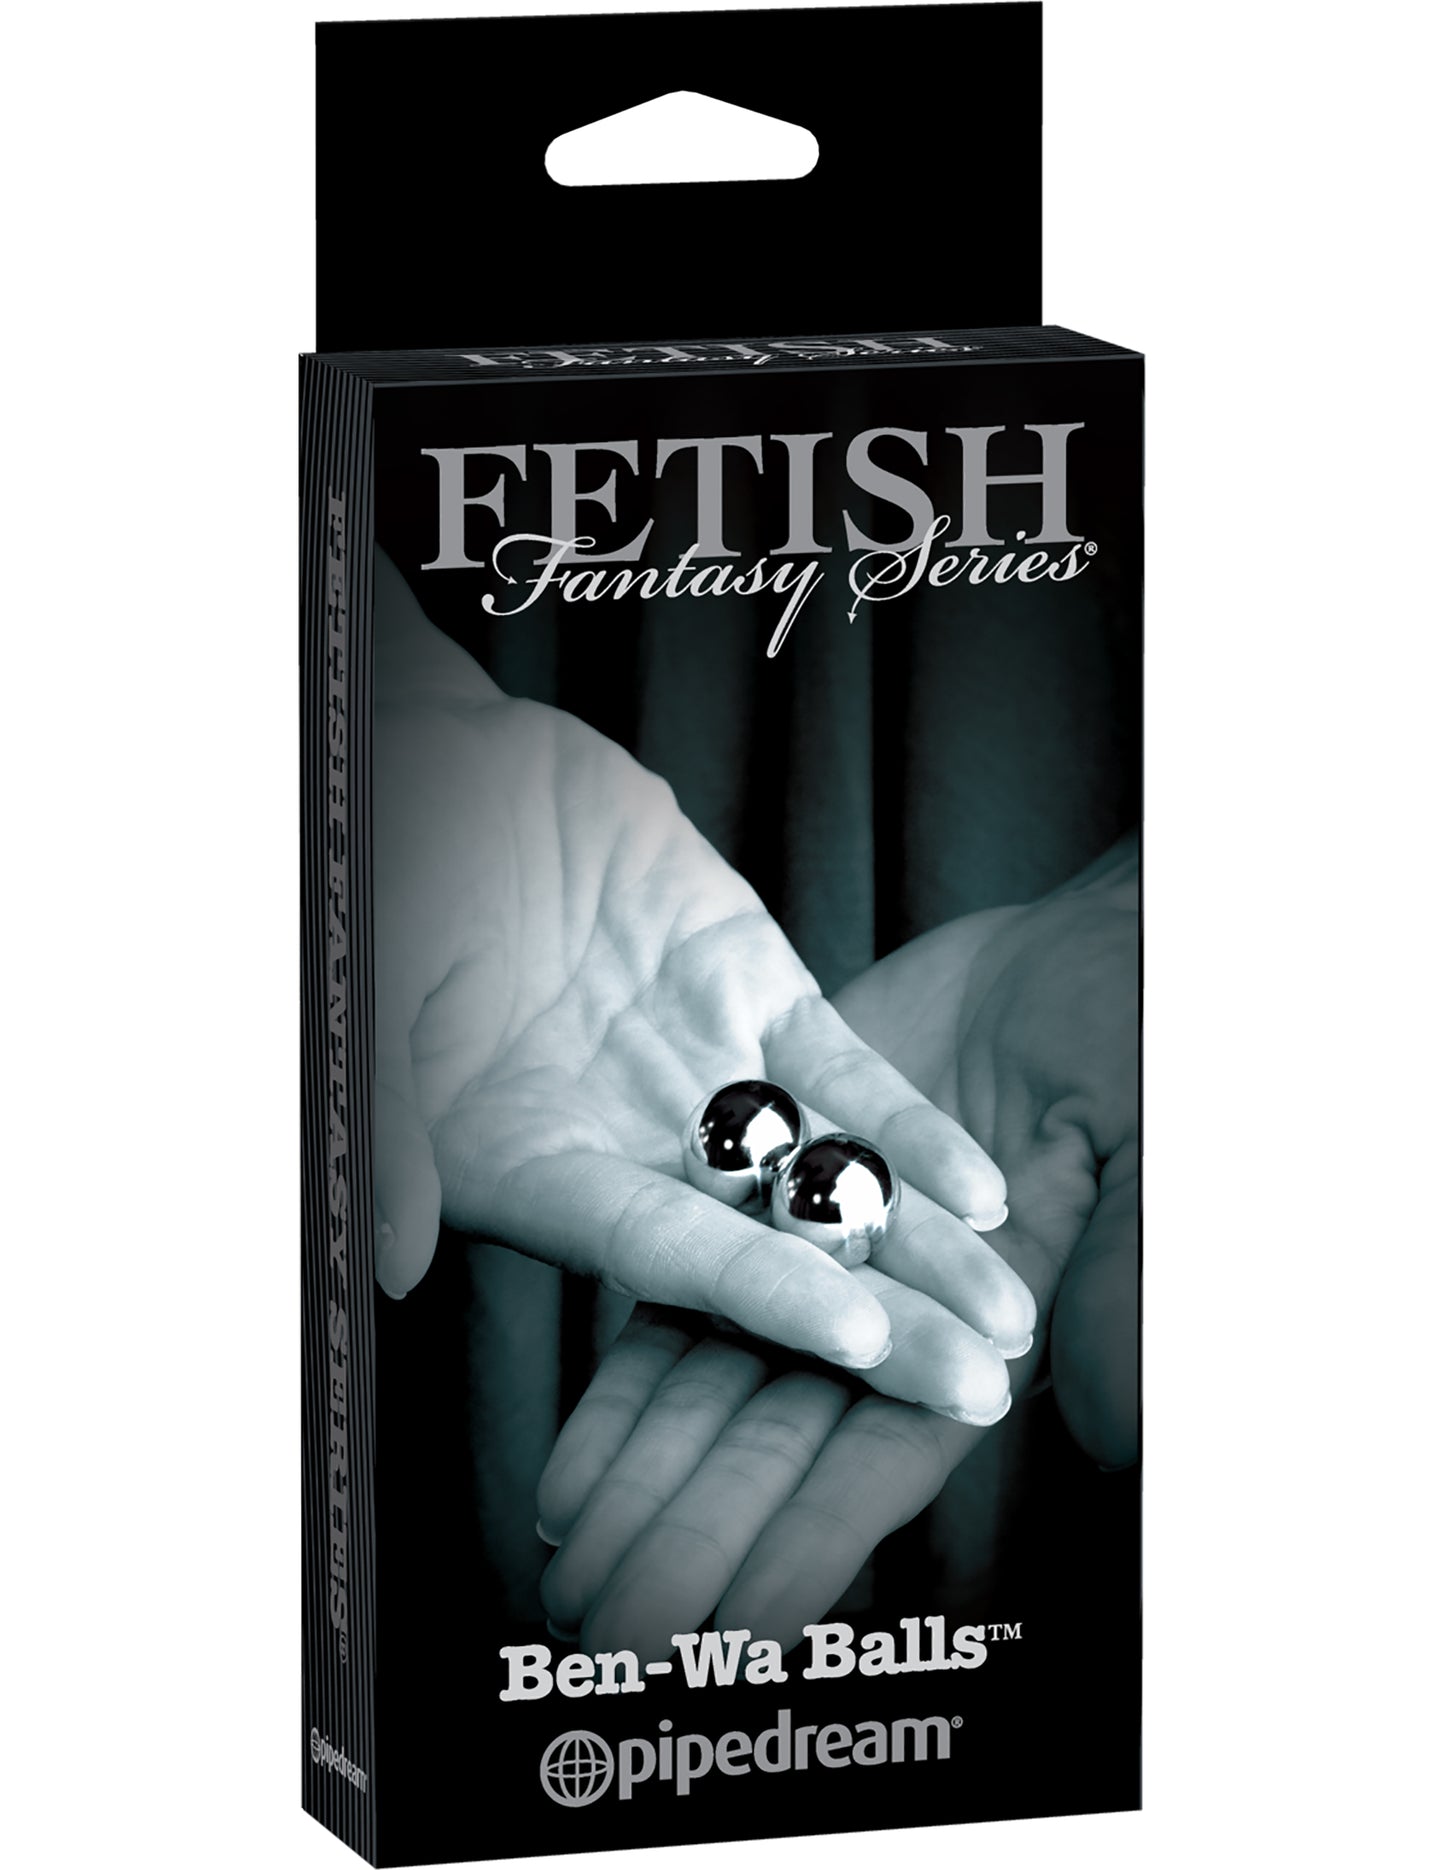 Fetish Fantasy Series Limited Edition Pelvic Floor Trainer